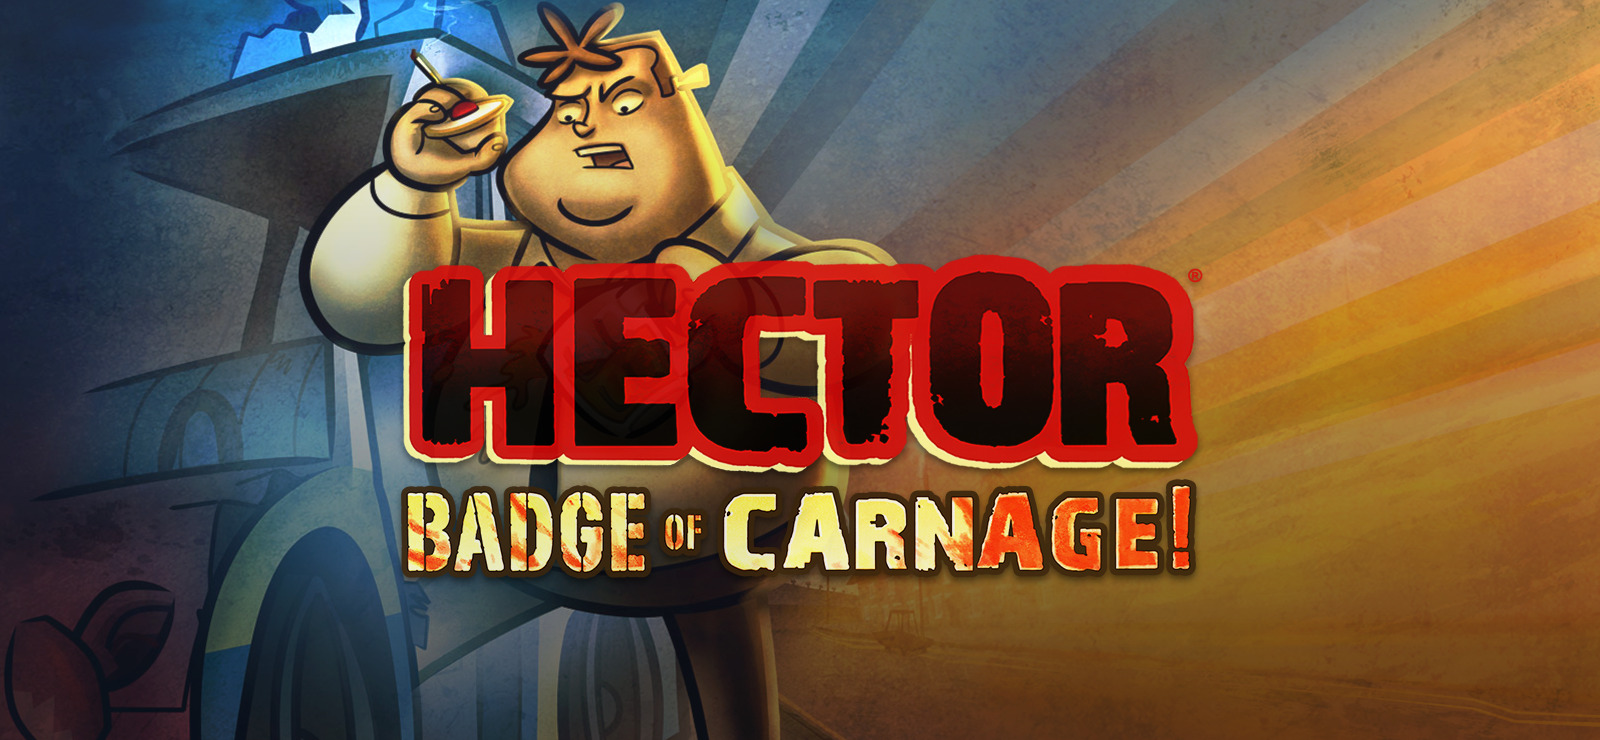 hector-badge-of-carnage-full-series-free-download-v1-0-gog-unlocked